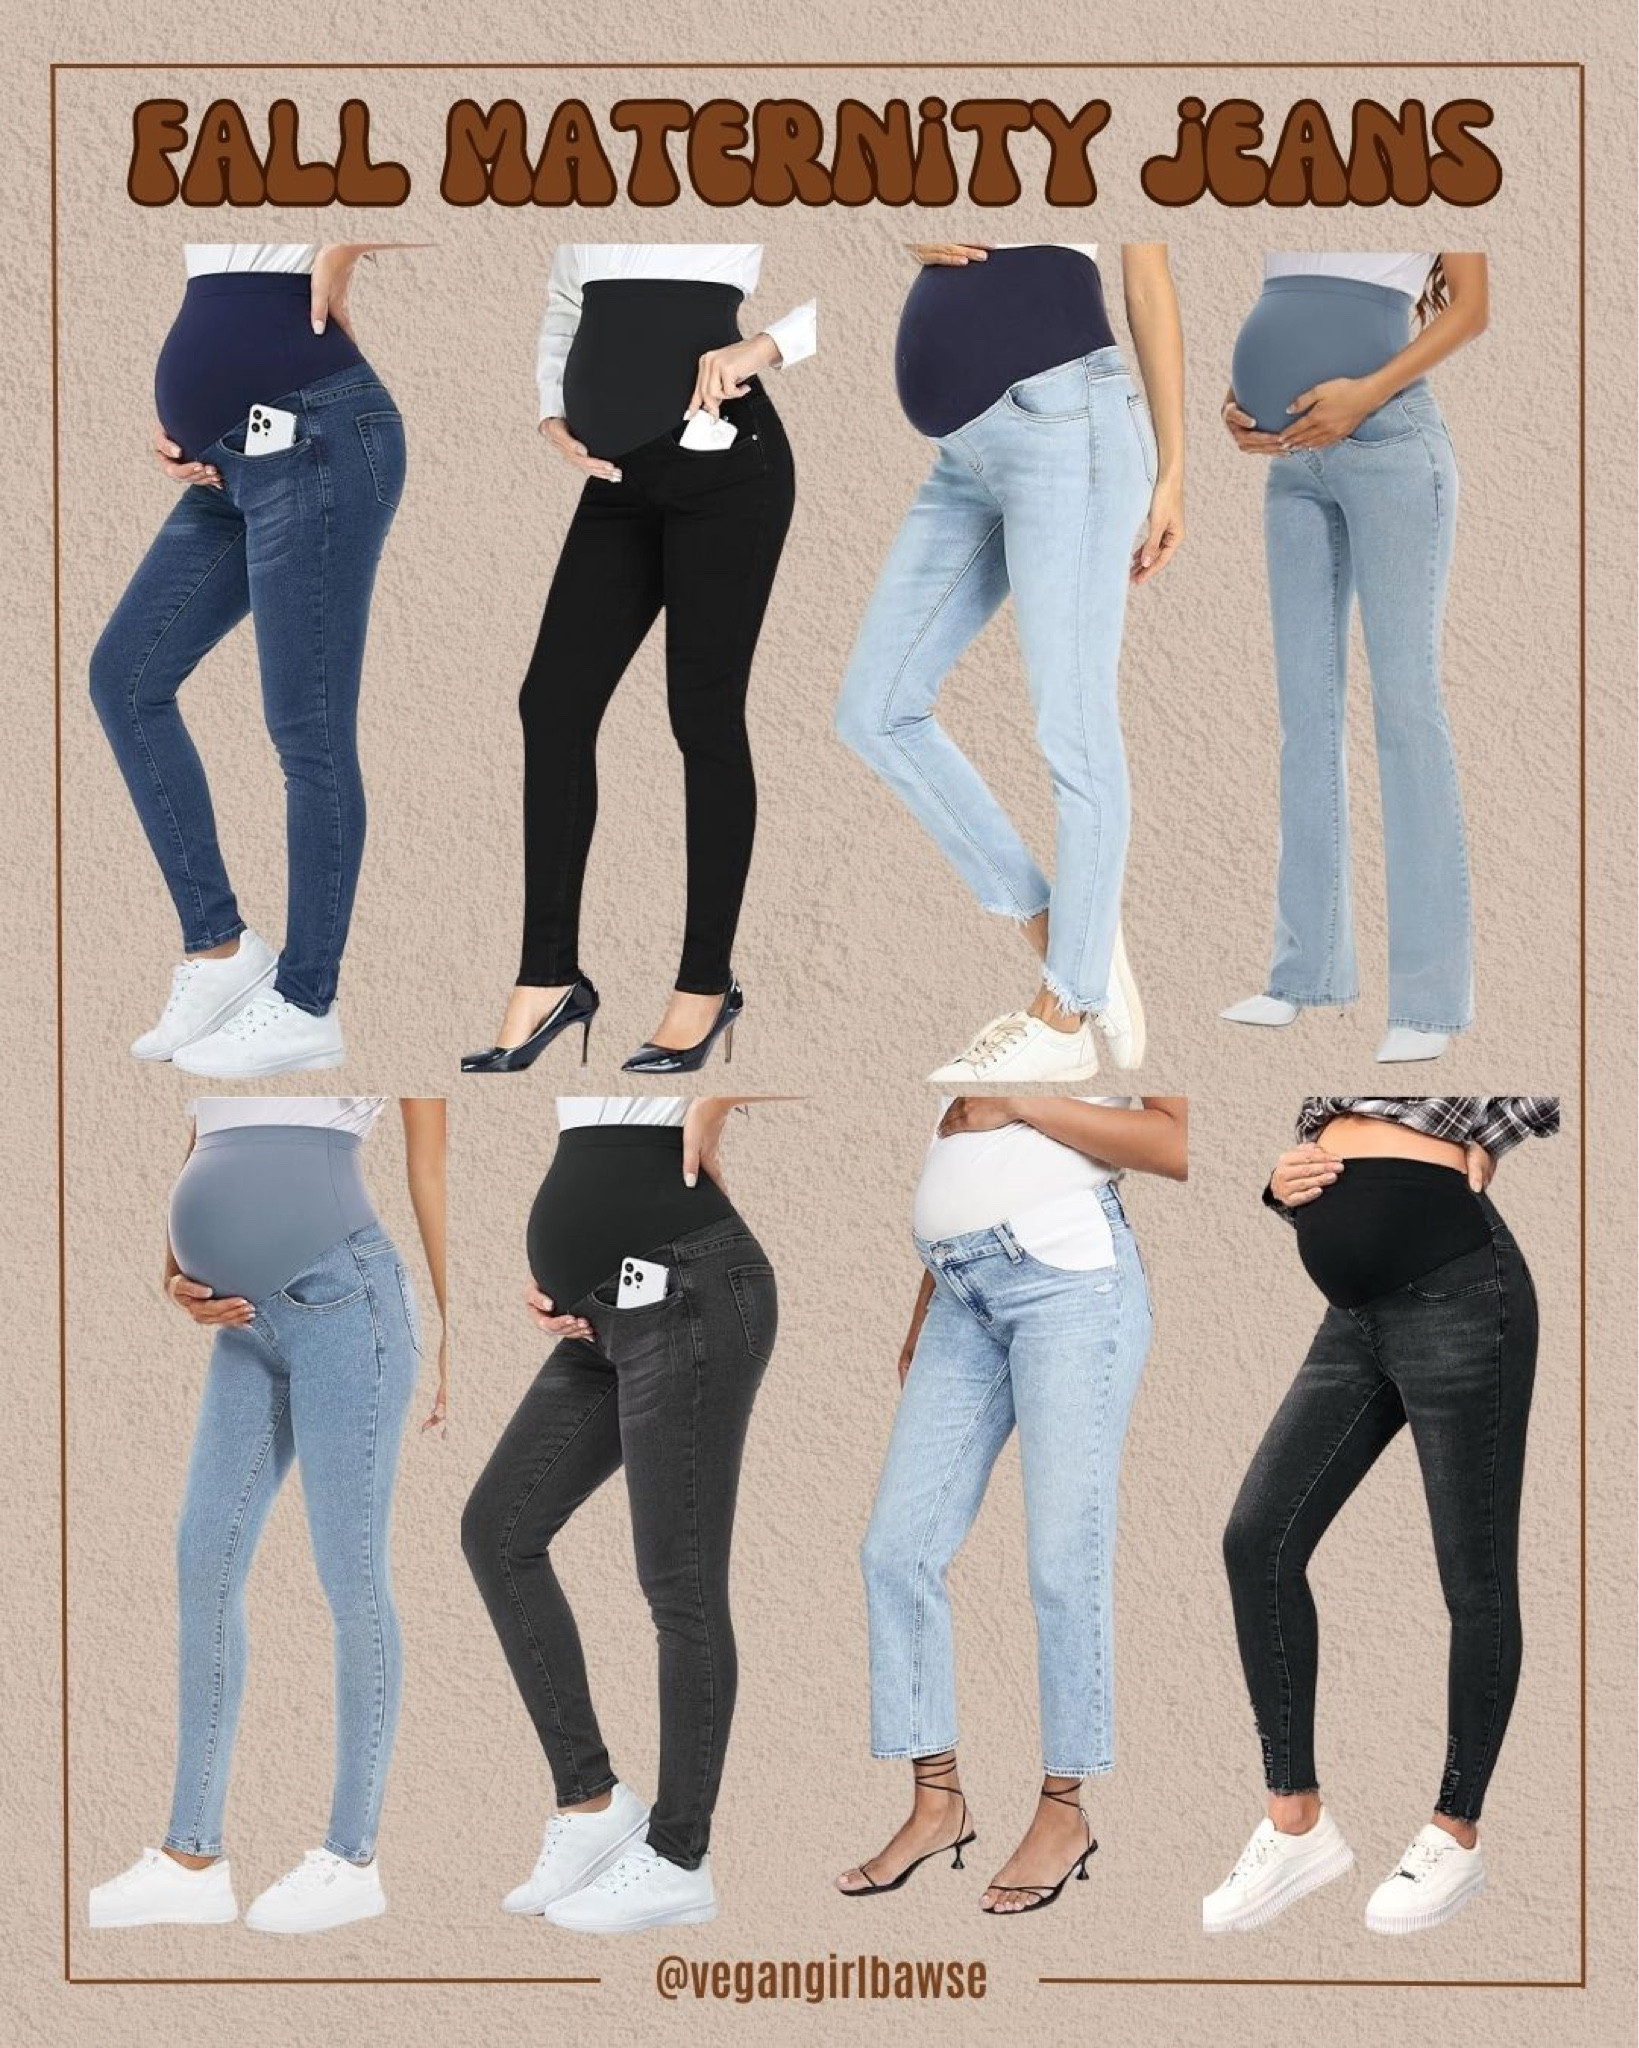 Women's Low Rise Maternity Jeans